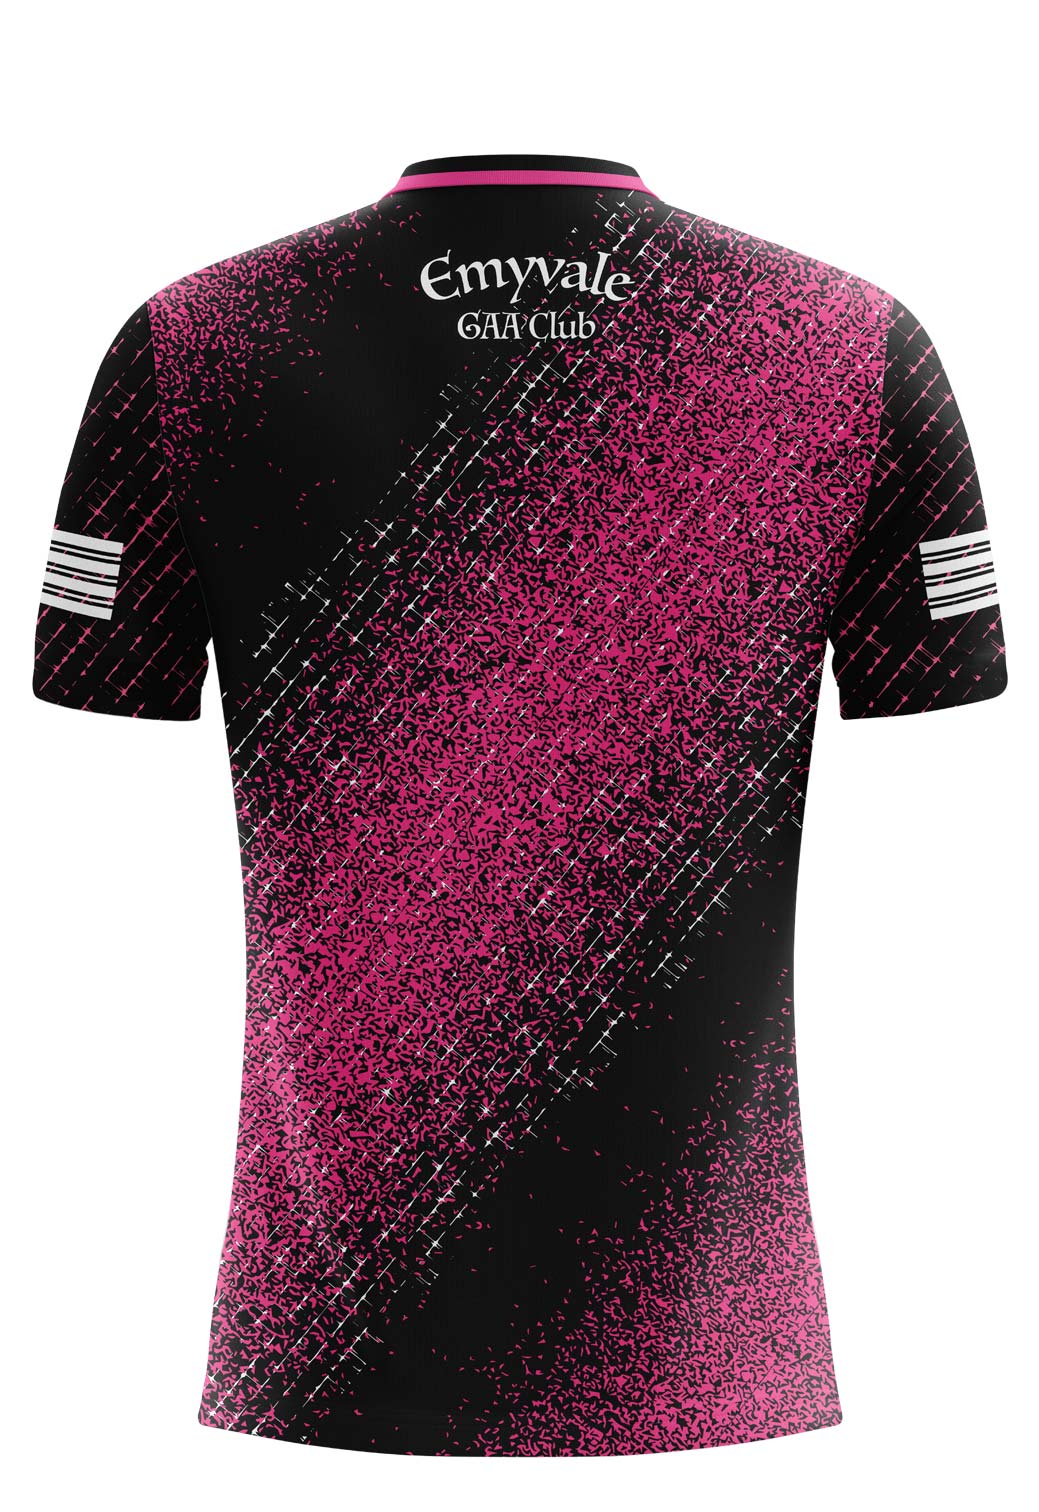 Emyvale GAA Pink Comet Style Training Jersey Regular Fit Adult